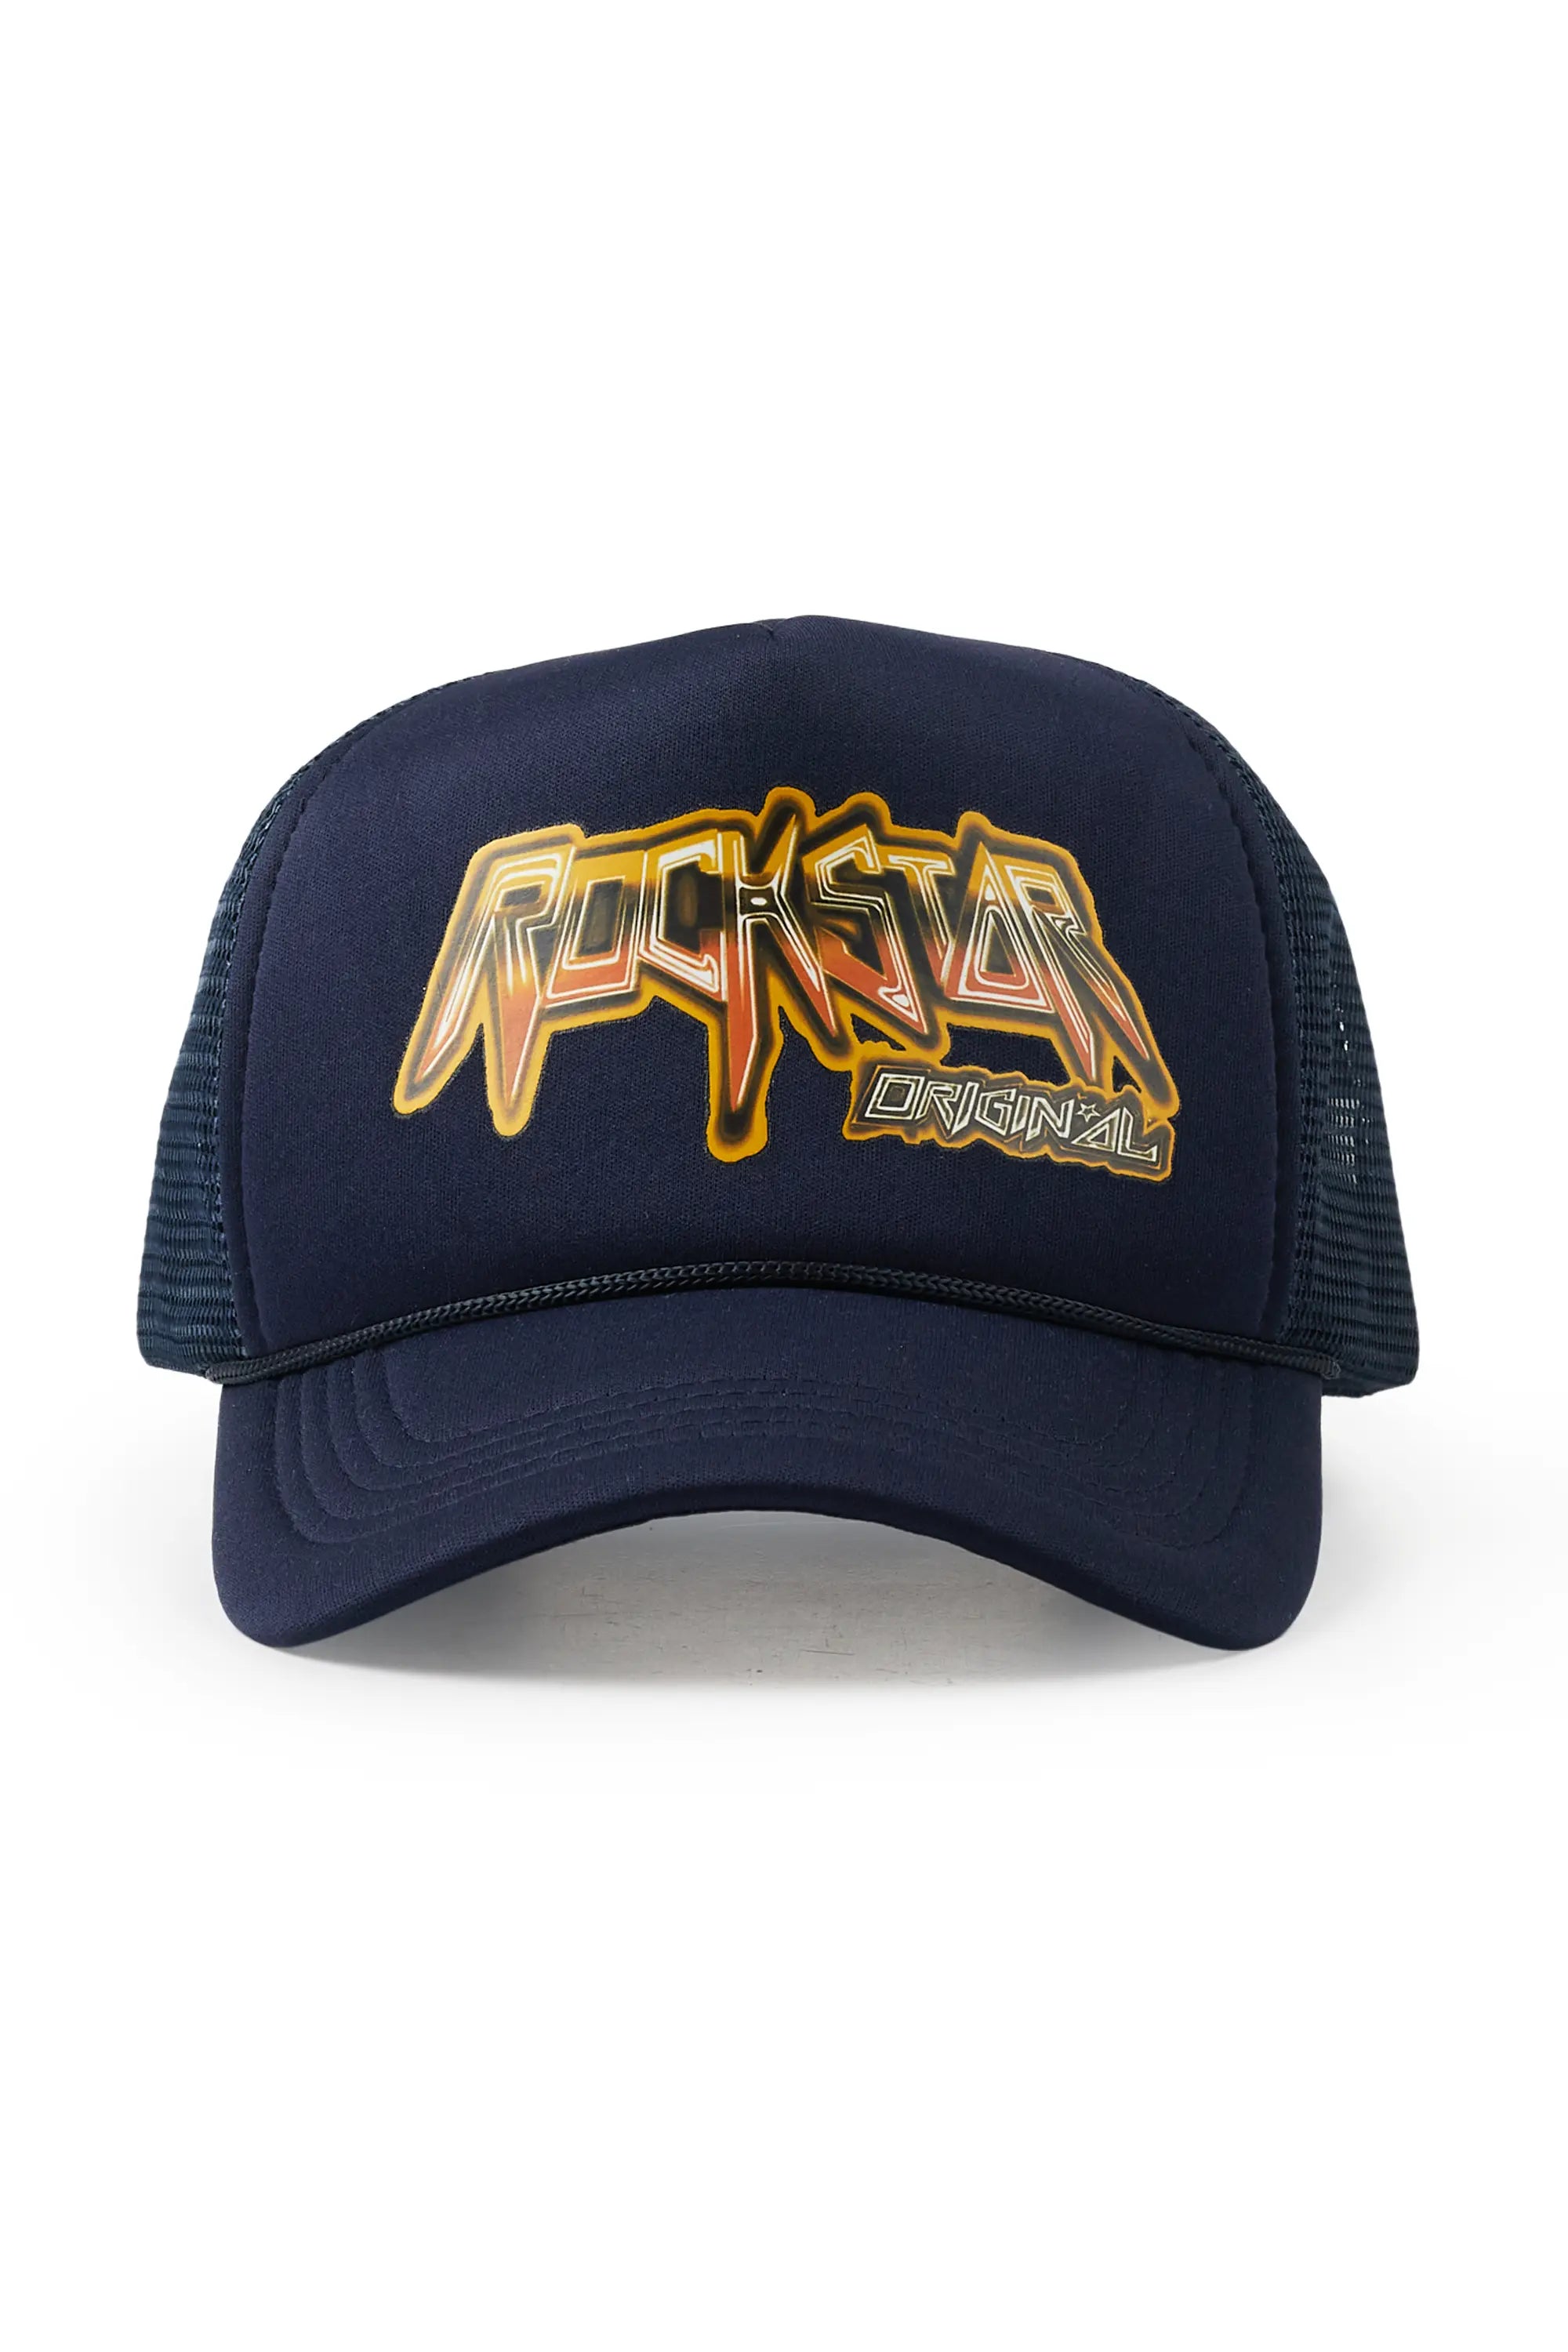 Ogen Navy Graphic Trucker Hat